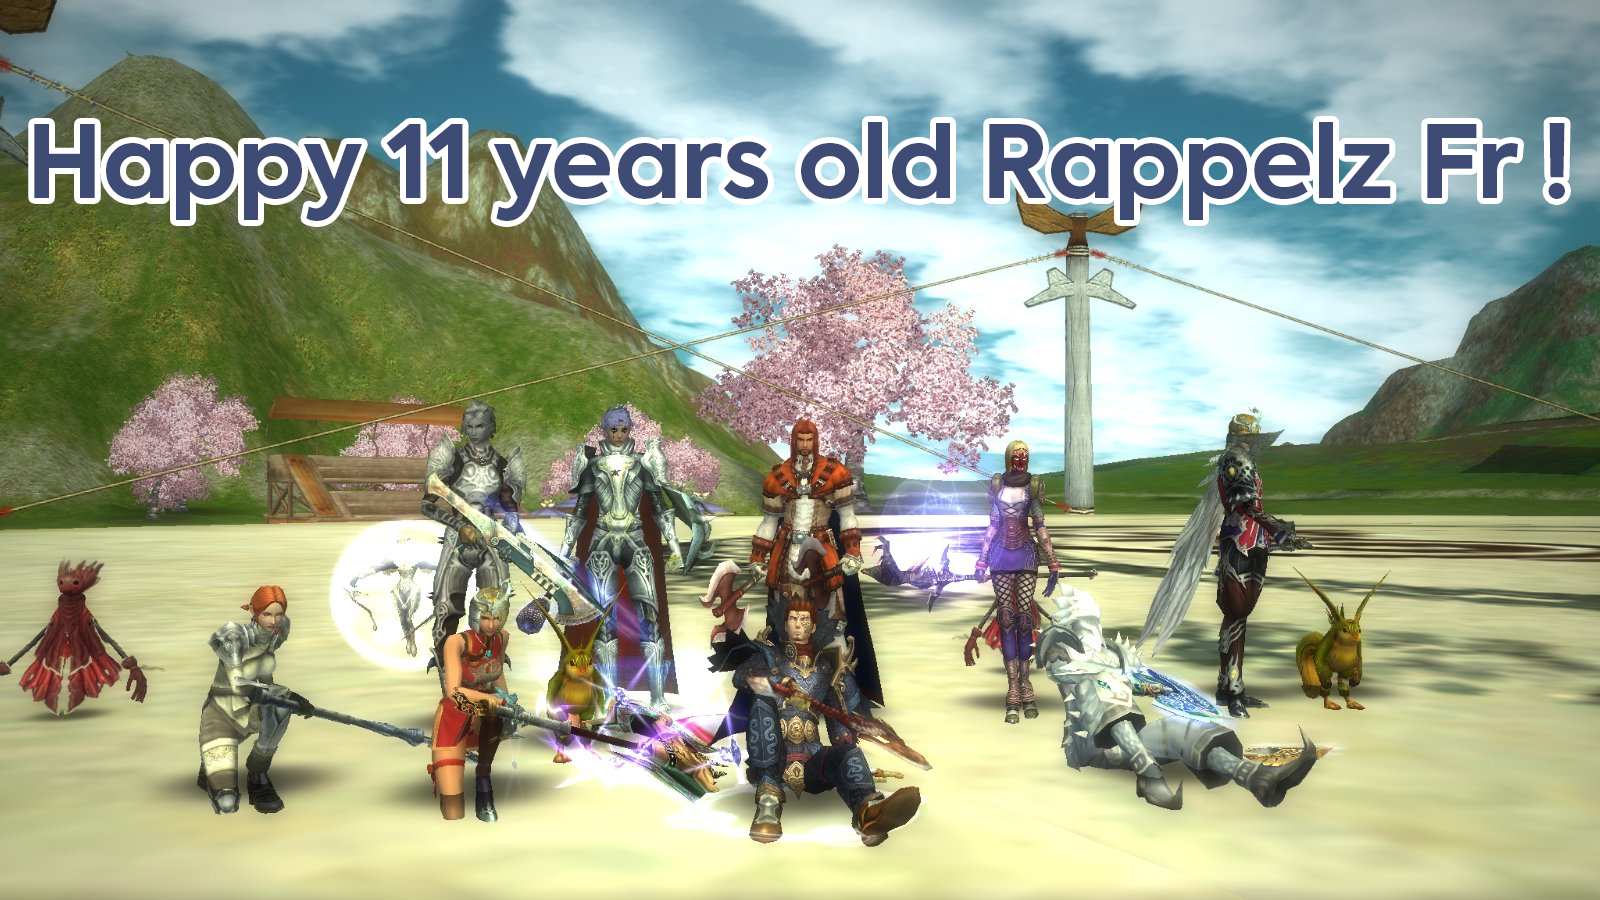 Rappelz Fr Celebrates Its 11th Anniversary History Of Rappelz